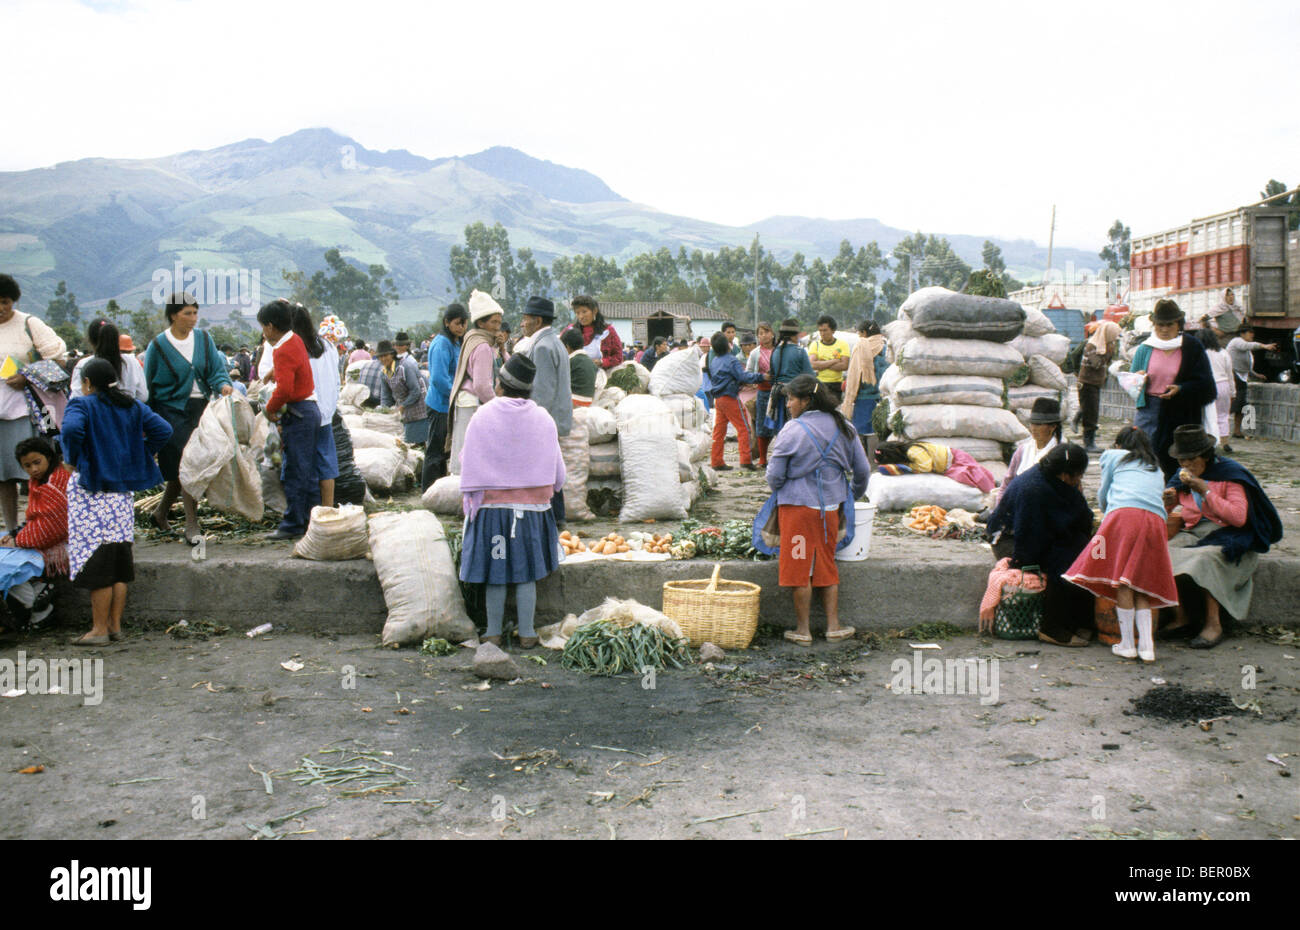 Edge of local vegetable market in the highlands Ecuador Stock Photo